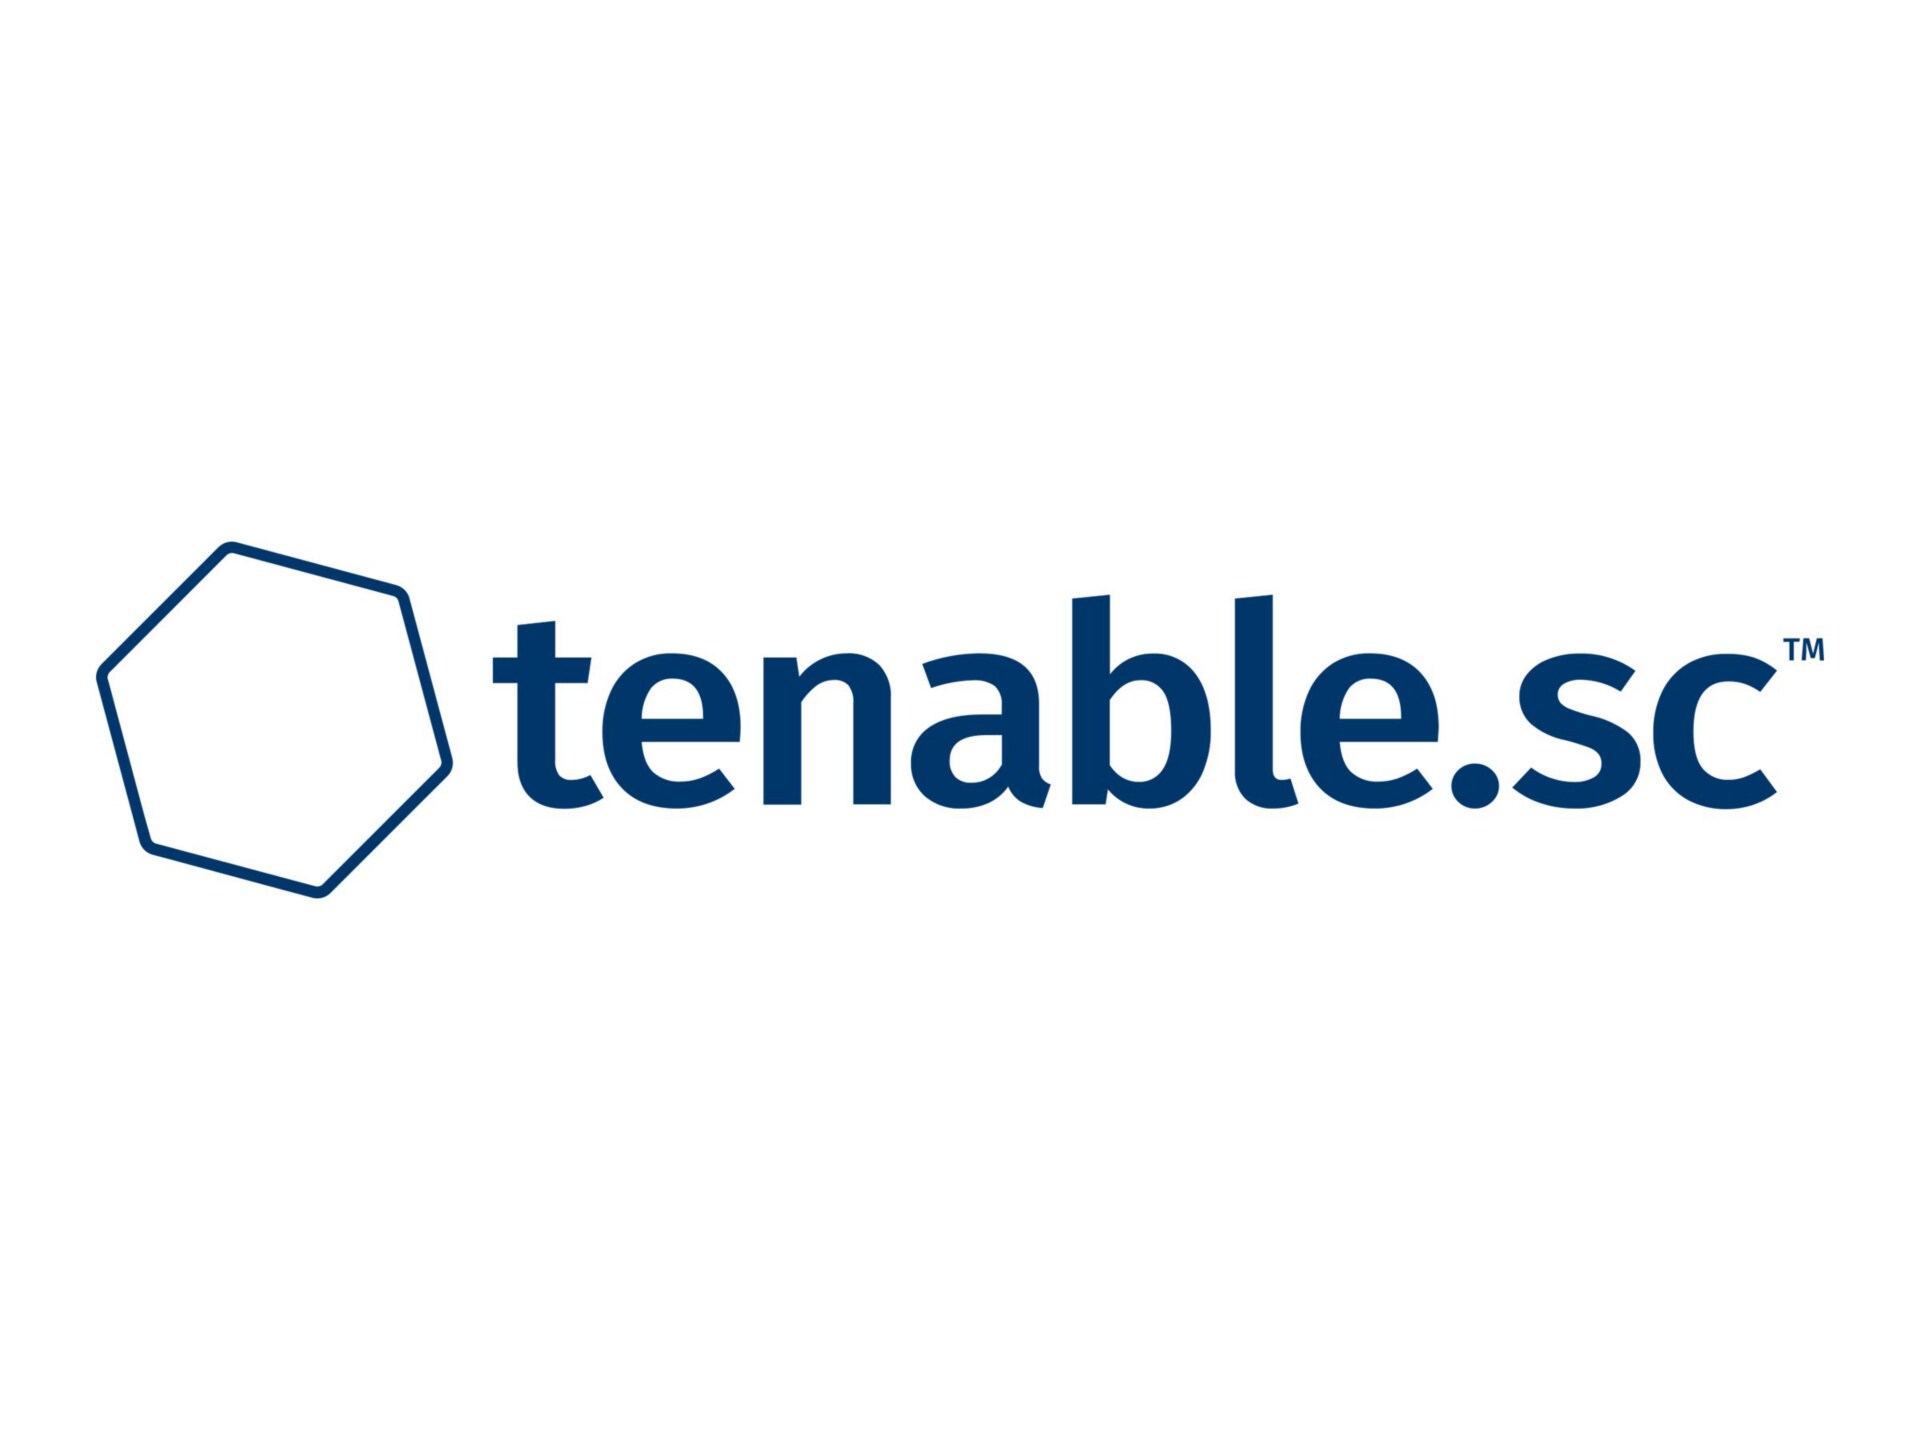 Tenable.sc - subscription license - 1 standard console